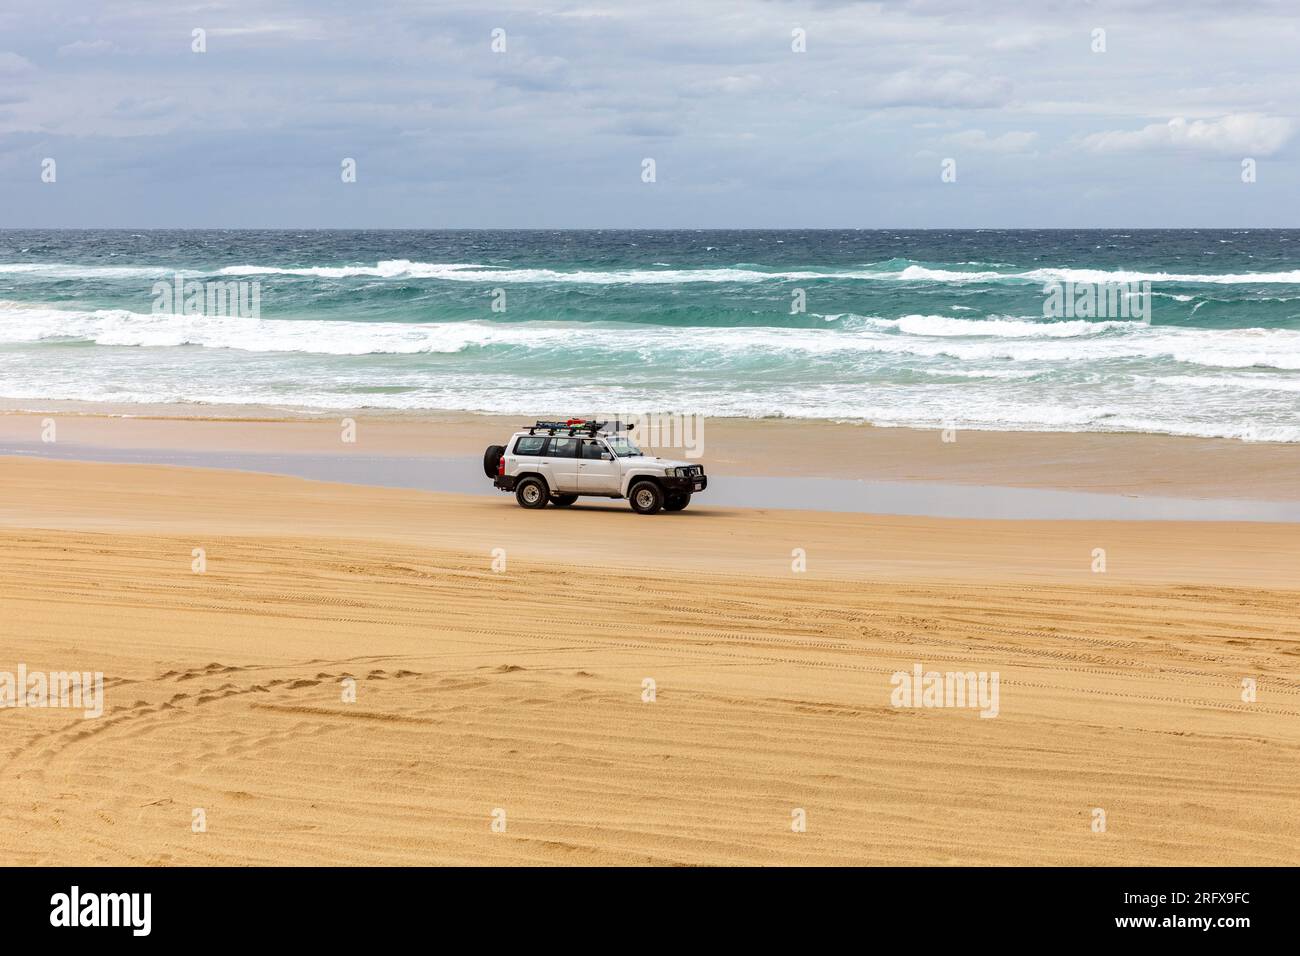 Fraser Island 75 mile beach Nissan Patrol 4x4 vehicle drives along the sand highway, Queensland,Australia Stock Photo